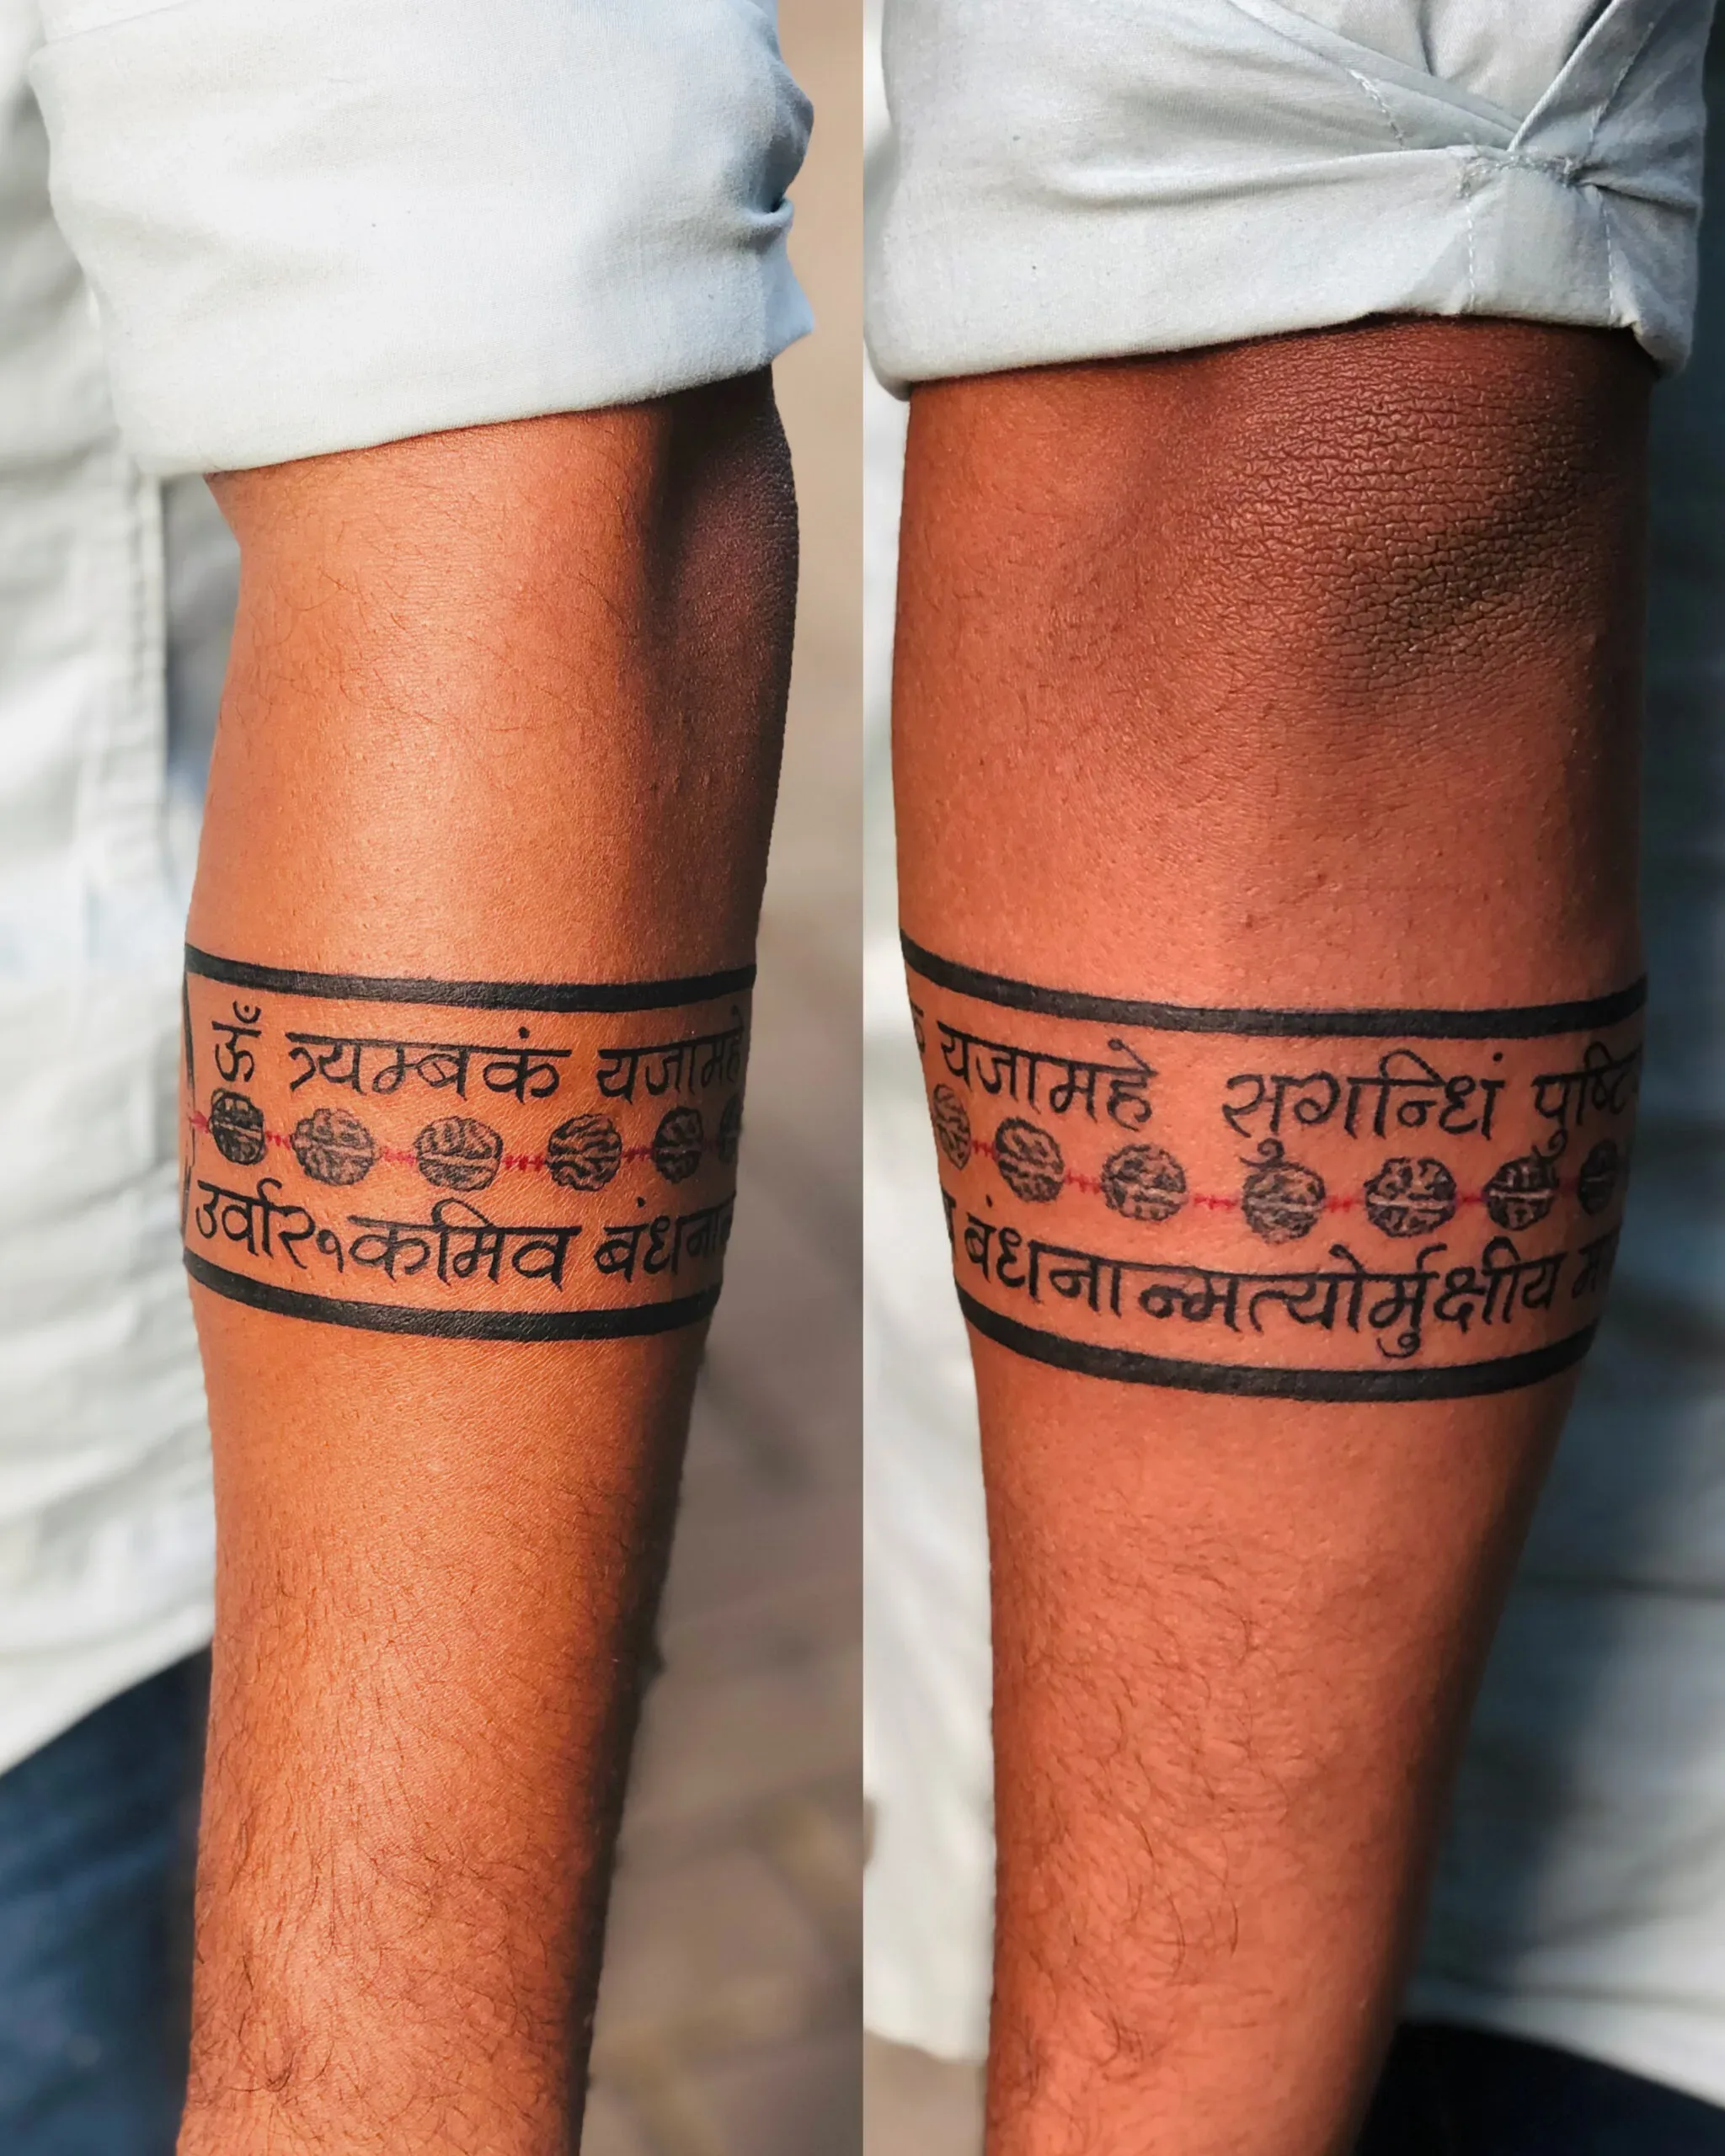 Lord Shiva with Maha Mrityunjaya Mantra Tattoo  Ace Tattooz